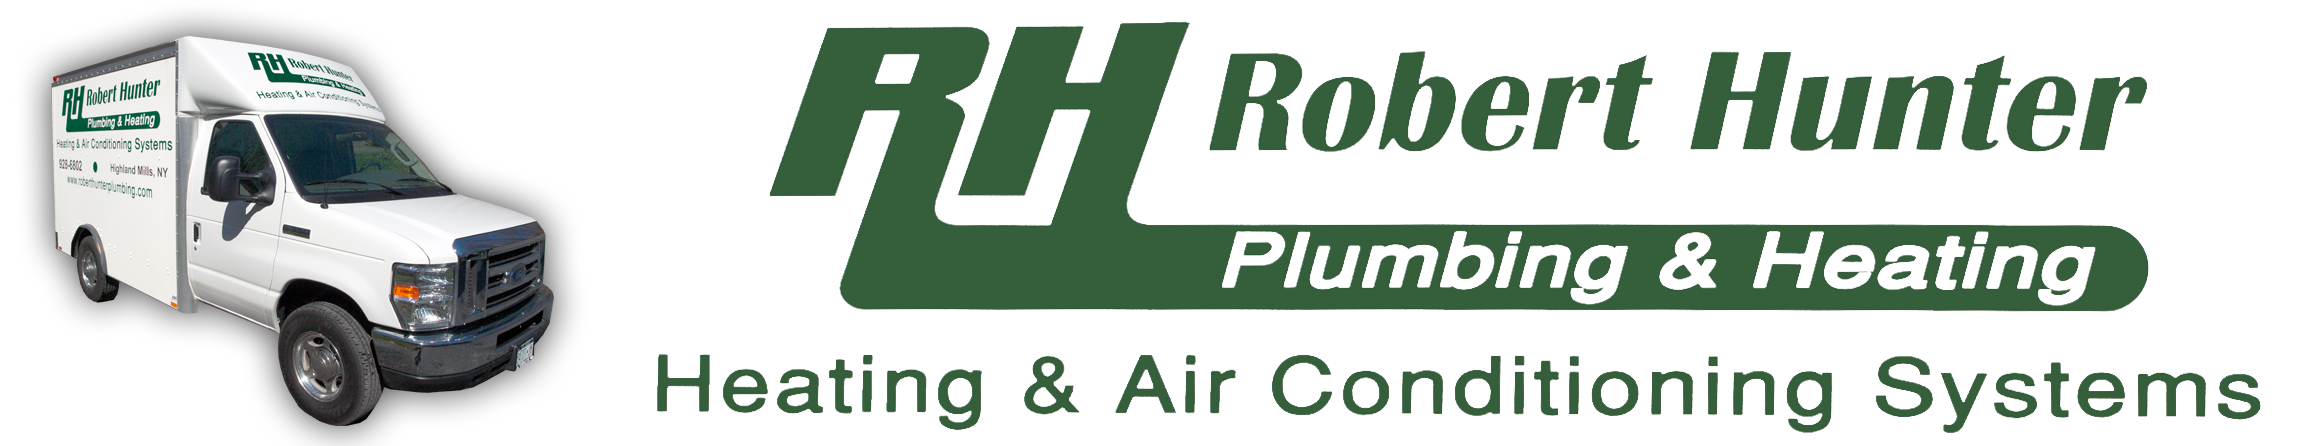 Robert Hunter Plumbing & Heating